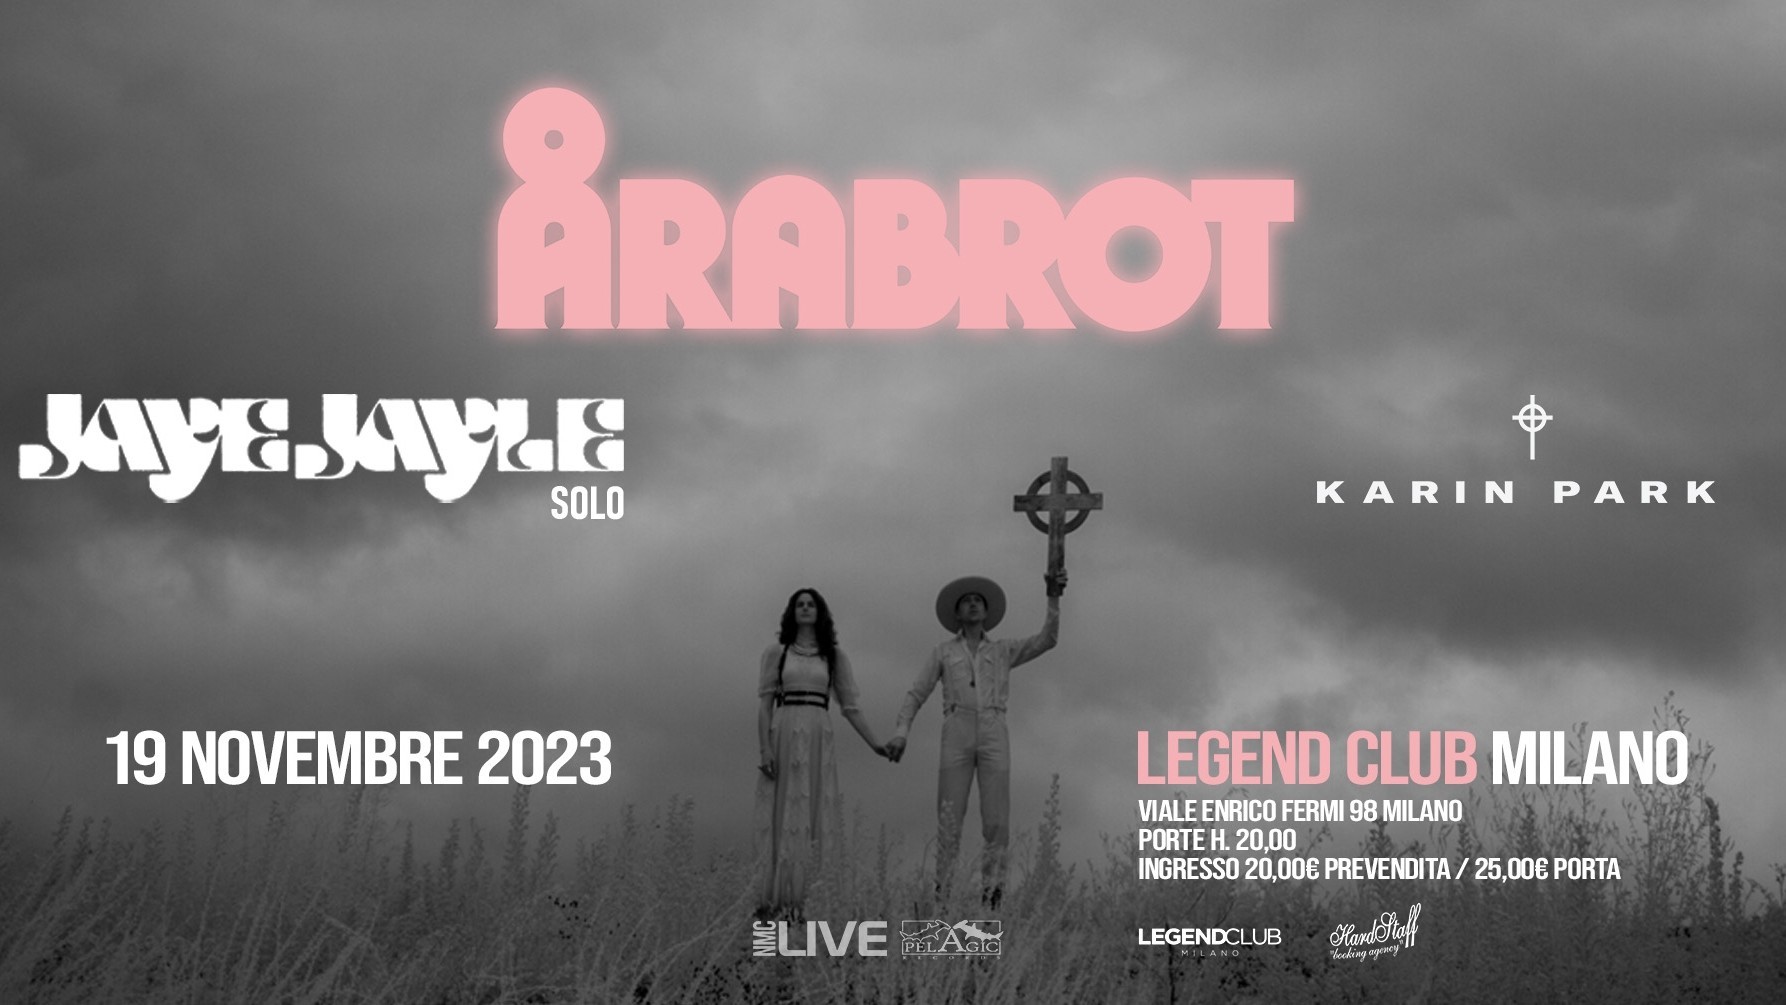 Arabrot + Jaye Jayle + Karin Park